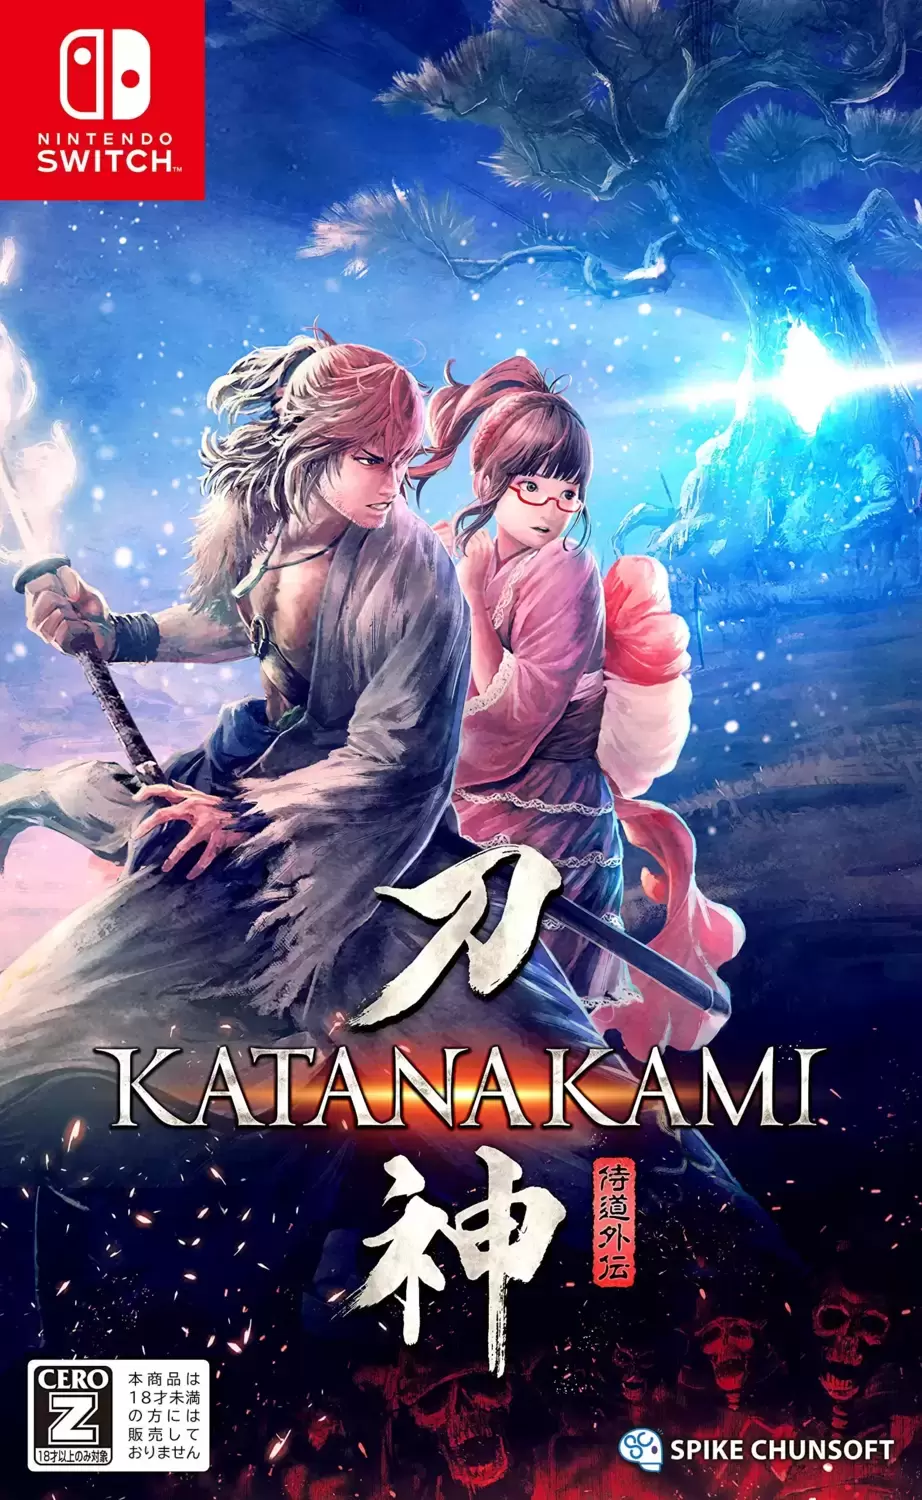 Nintendo Switch Games - Katanakami